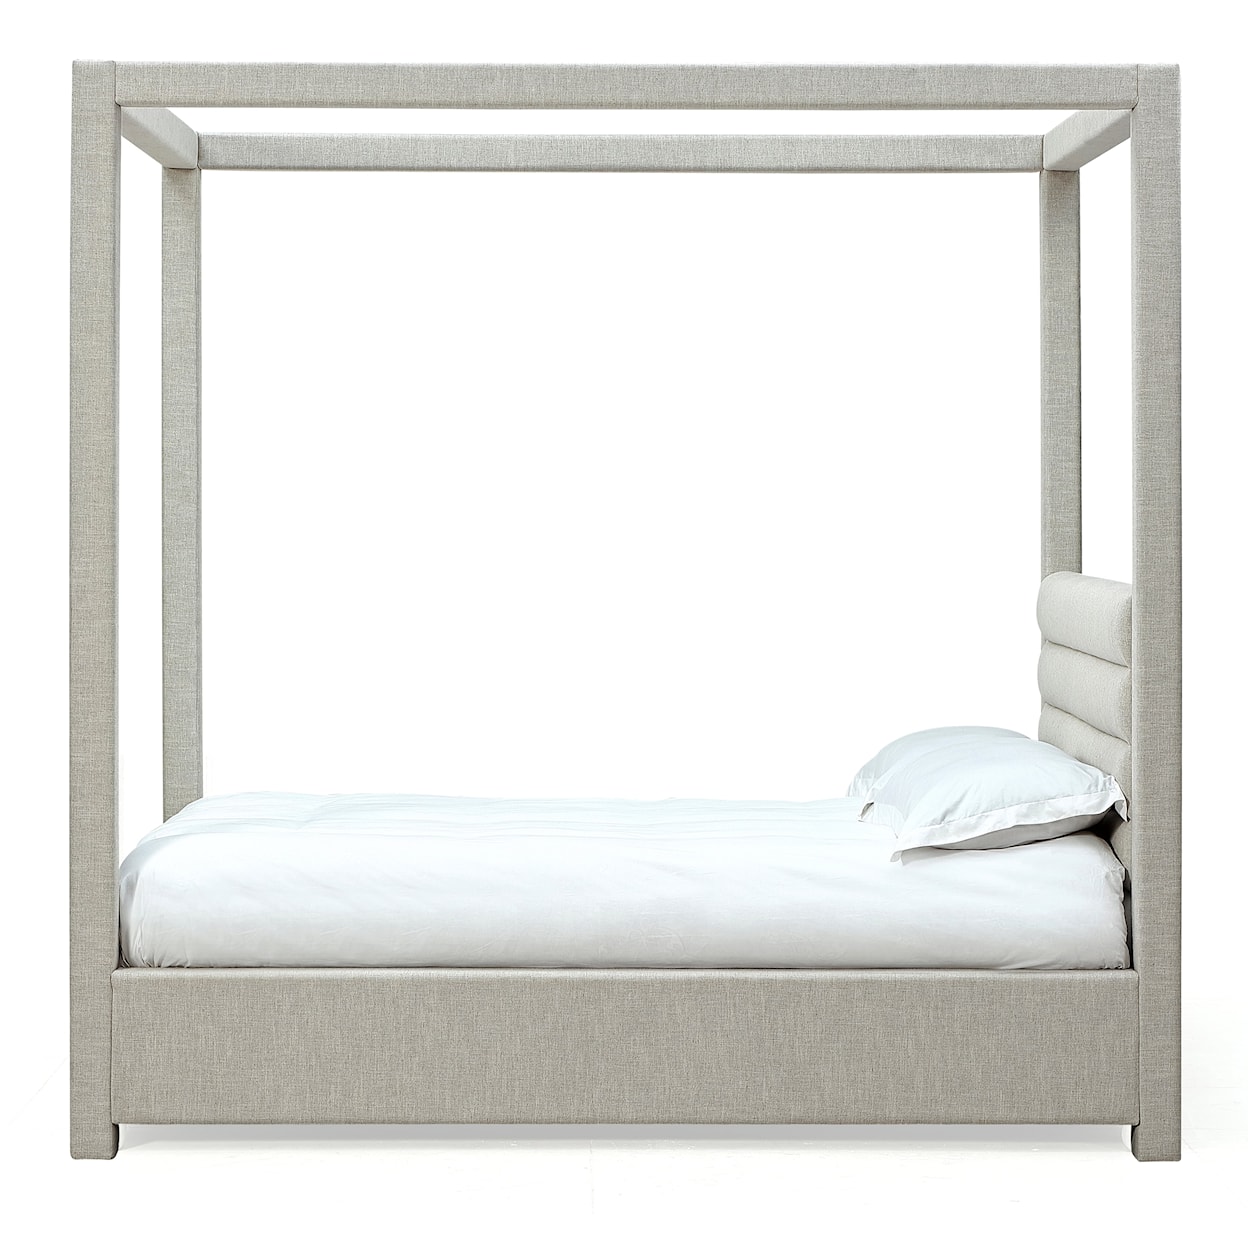 Modus International Rockford California King Upholstered Canopy Bed